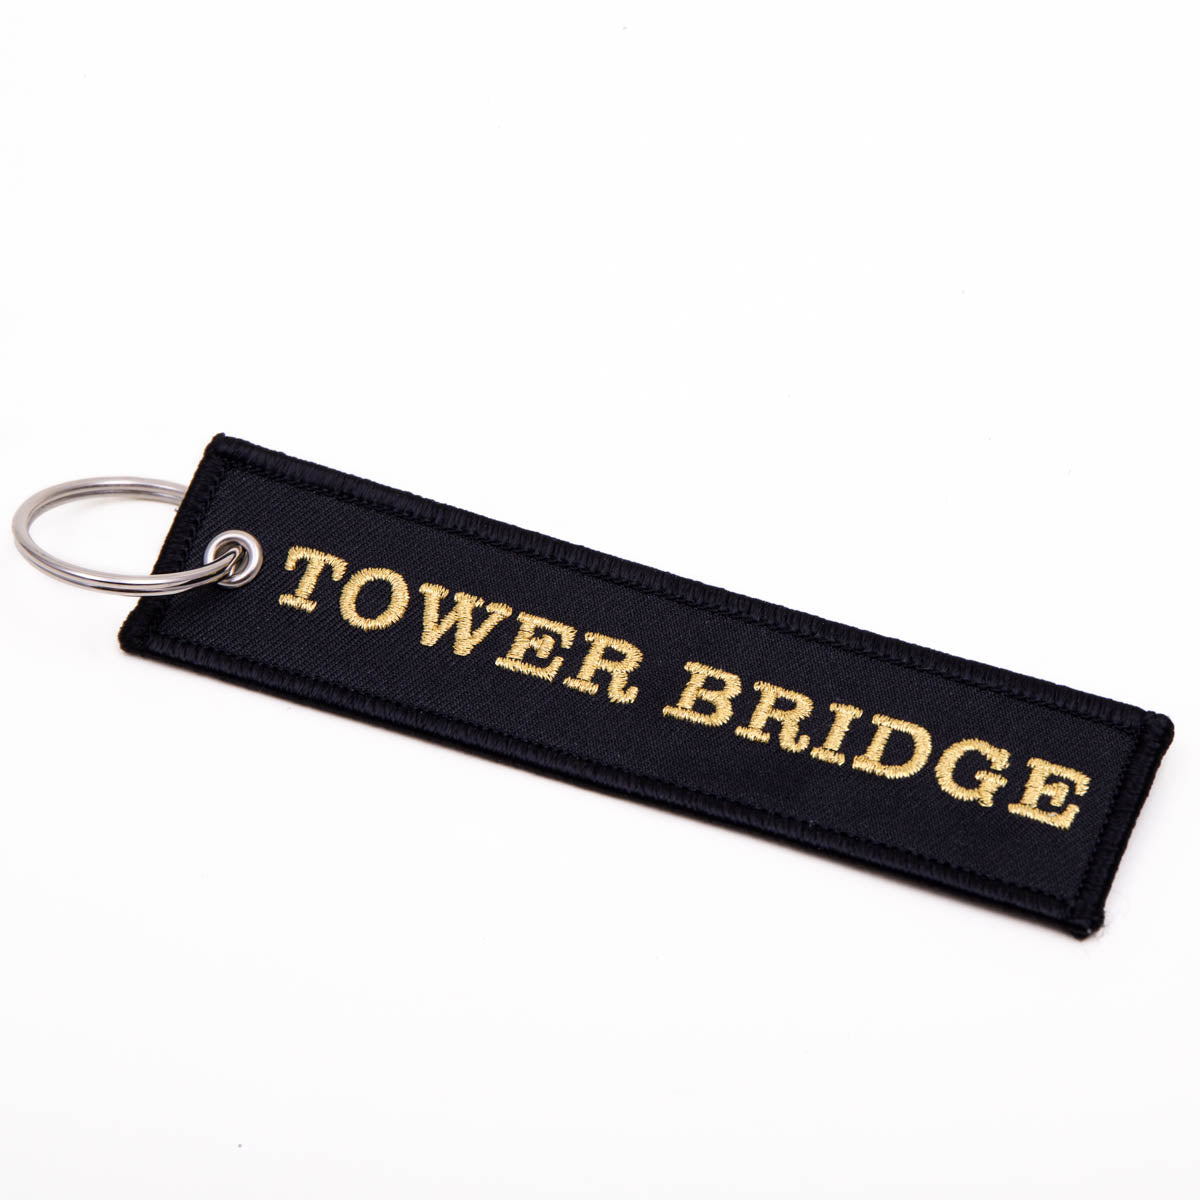 Tower Bridge - Bridge Master Woven Keyring 2